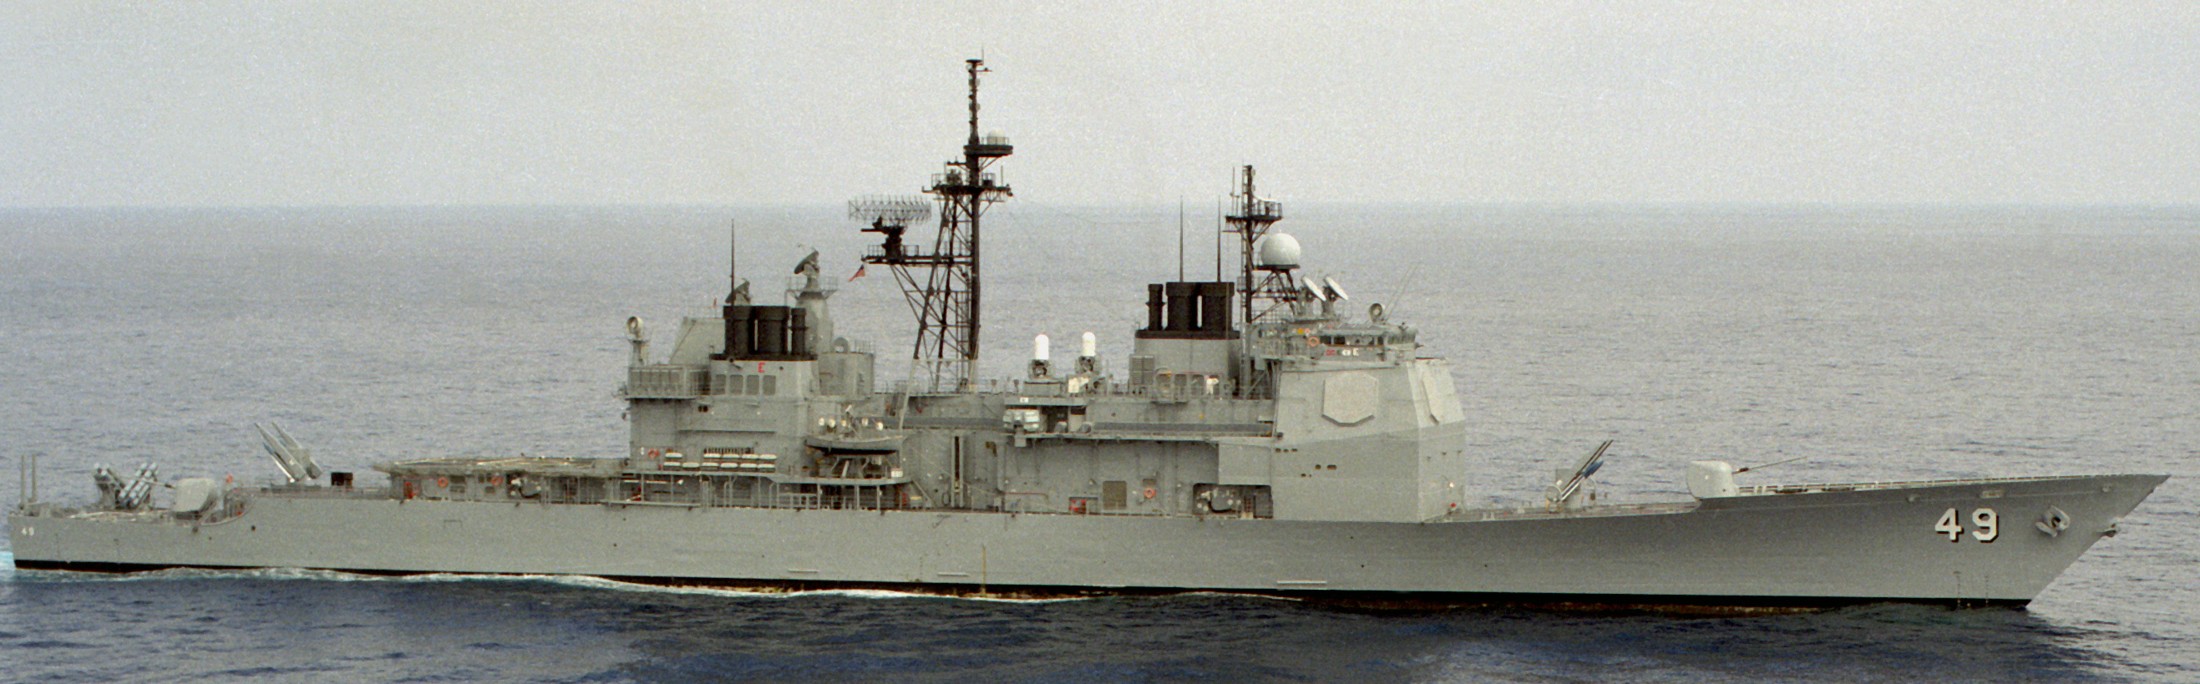 cg-49 uss vincennes ticonderoga class guided missile cruiser aegis us navy 58